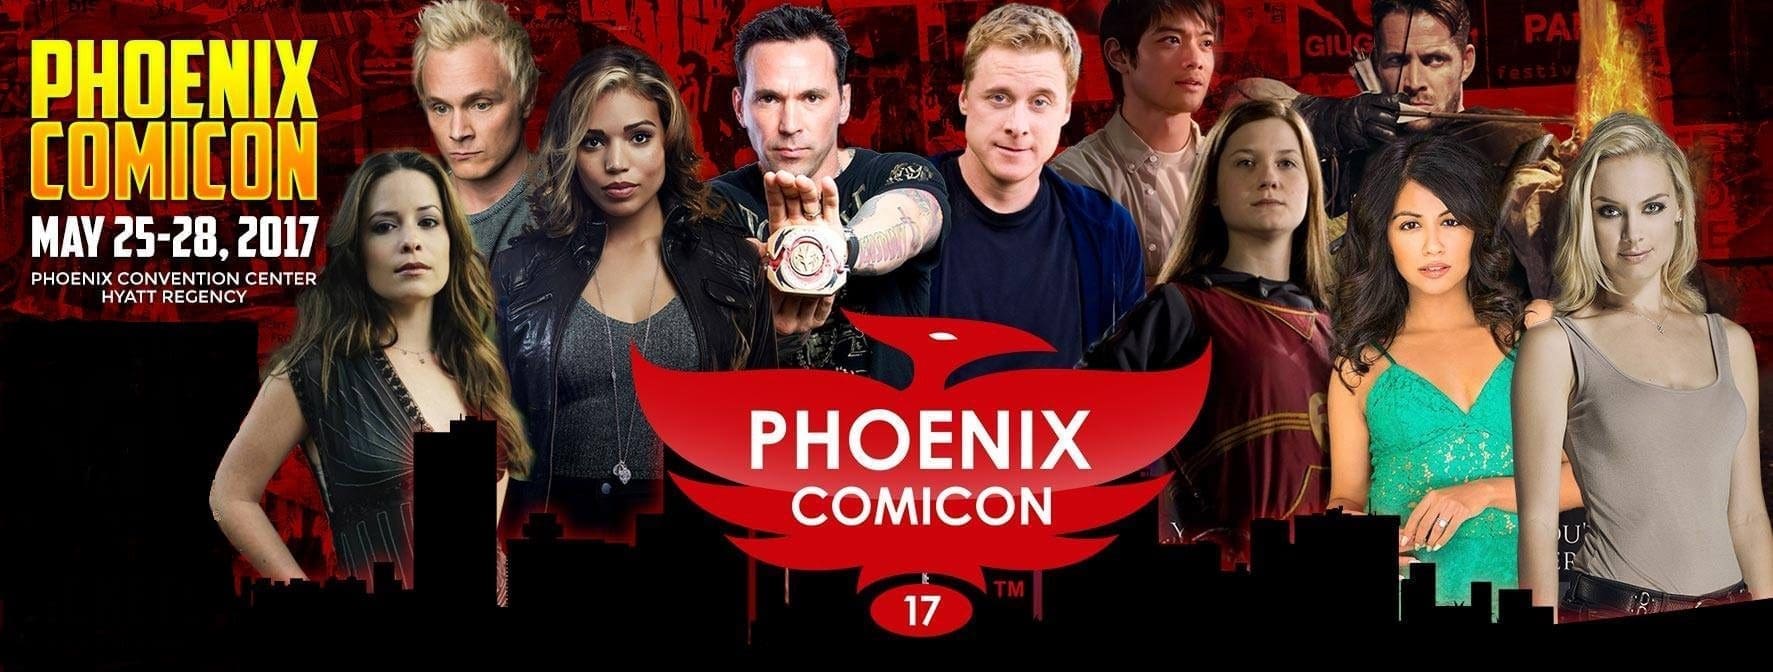 phoenix comicon 2017